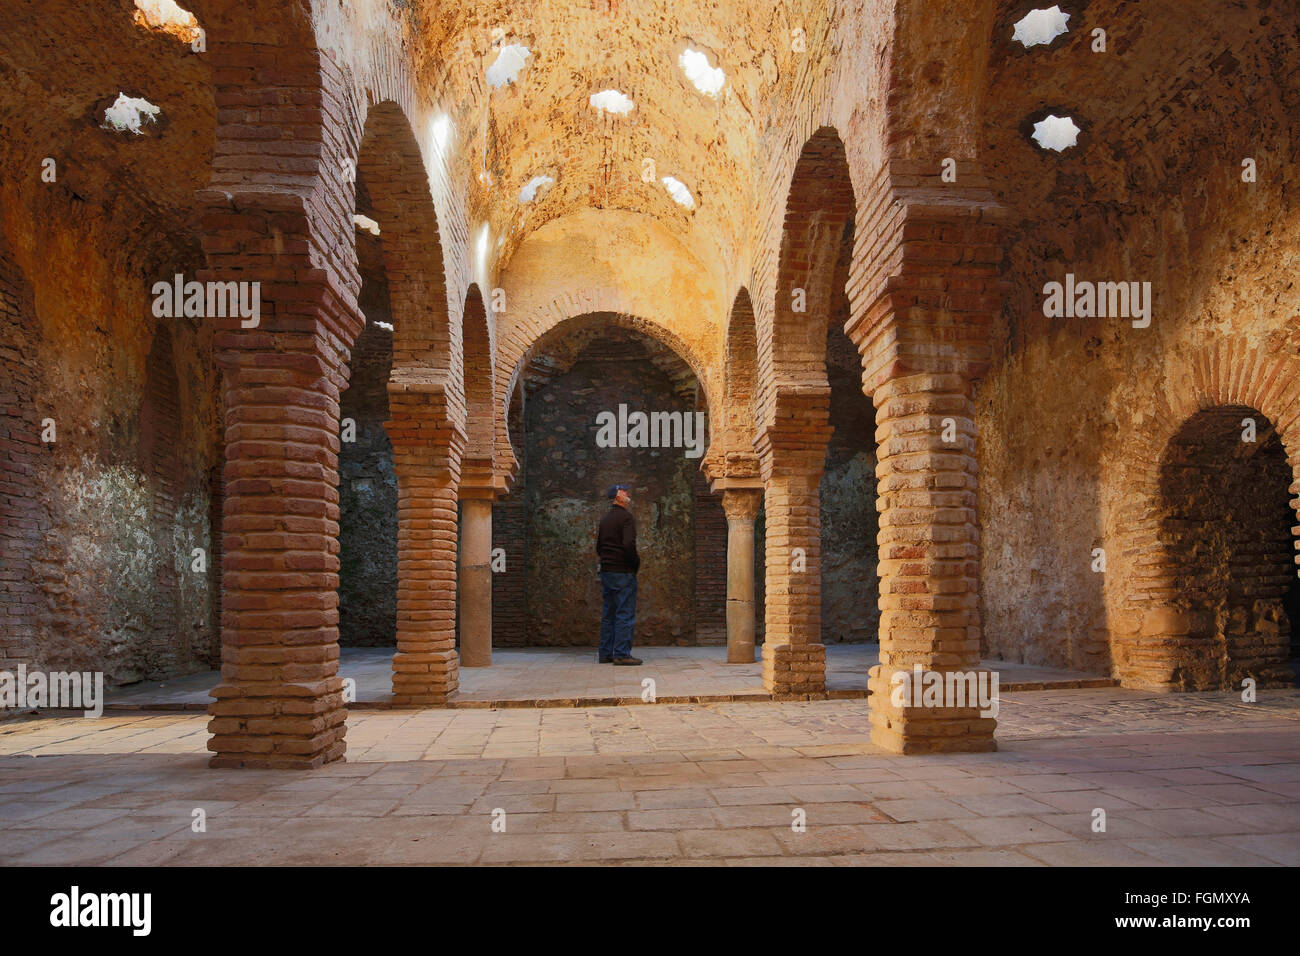 Ronda, Malaga Province, Andalusia, southern Spain. Interior of the Baños Arabes, or Arab baths. Stock Photo